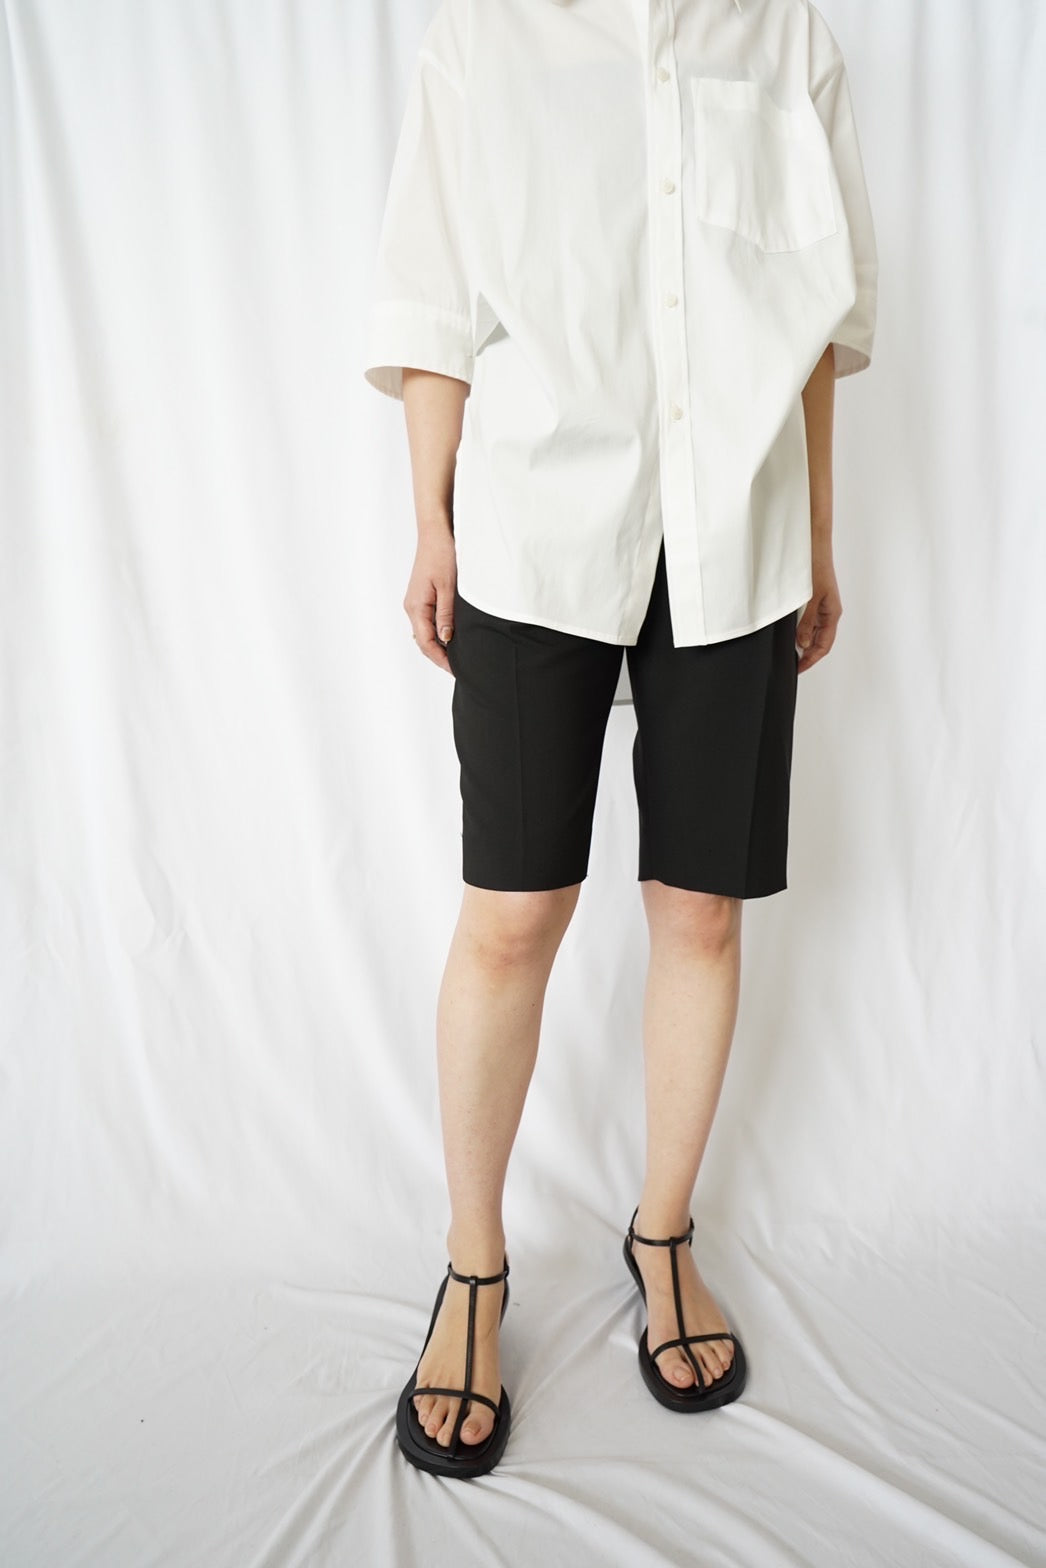 Half Sleeve Big Shirt - WHITE